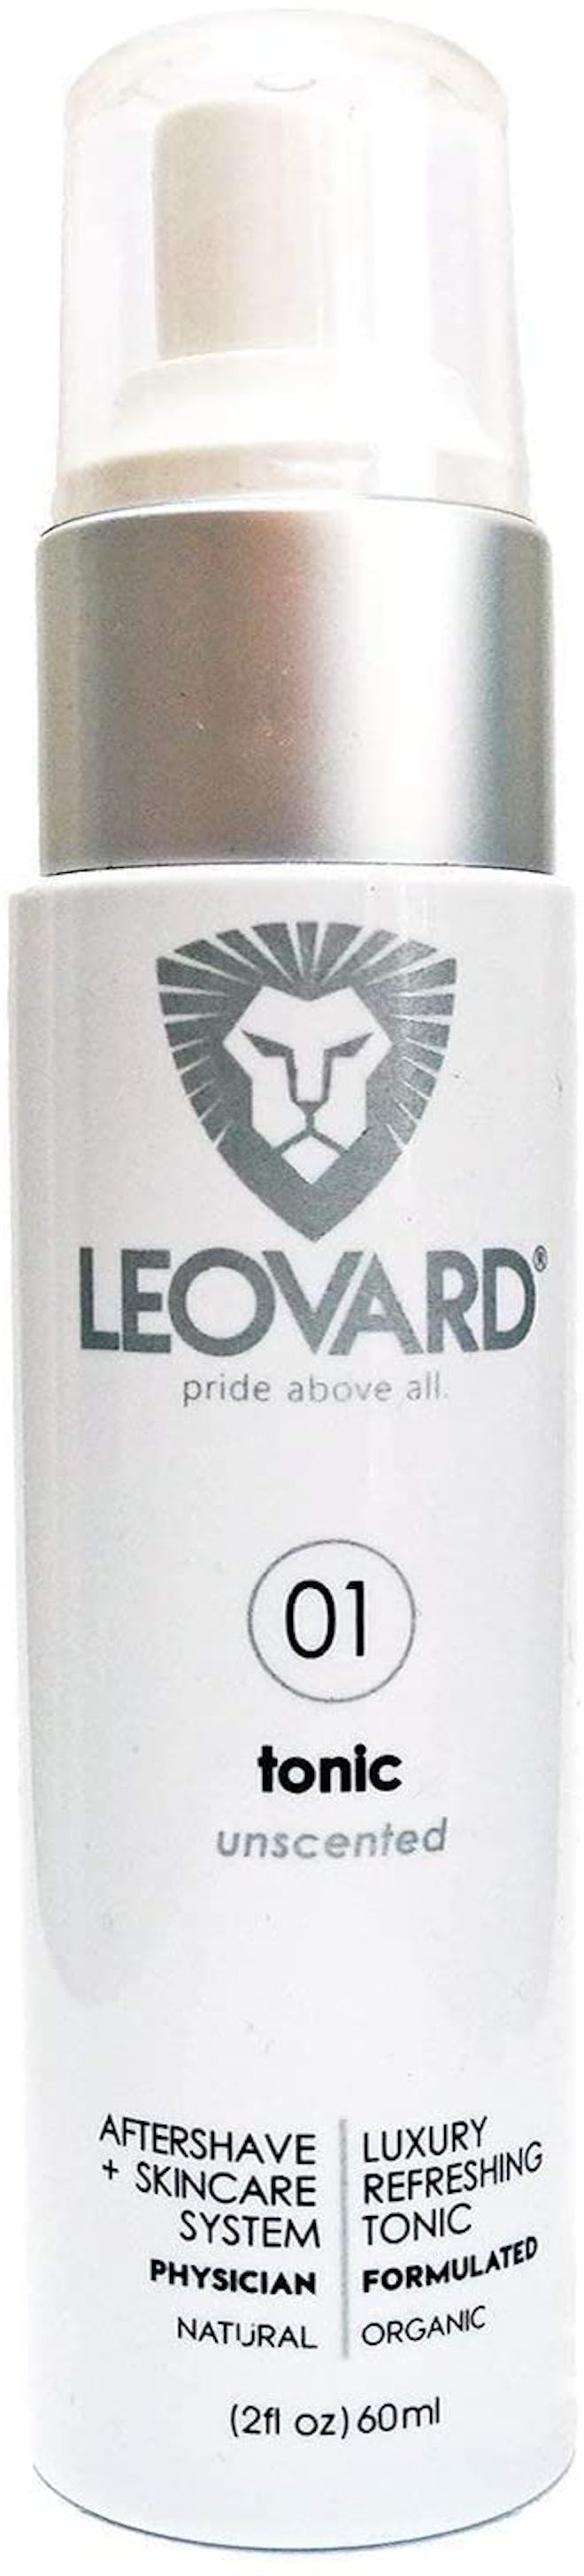 Leovard Aftershave Tonic 